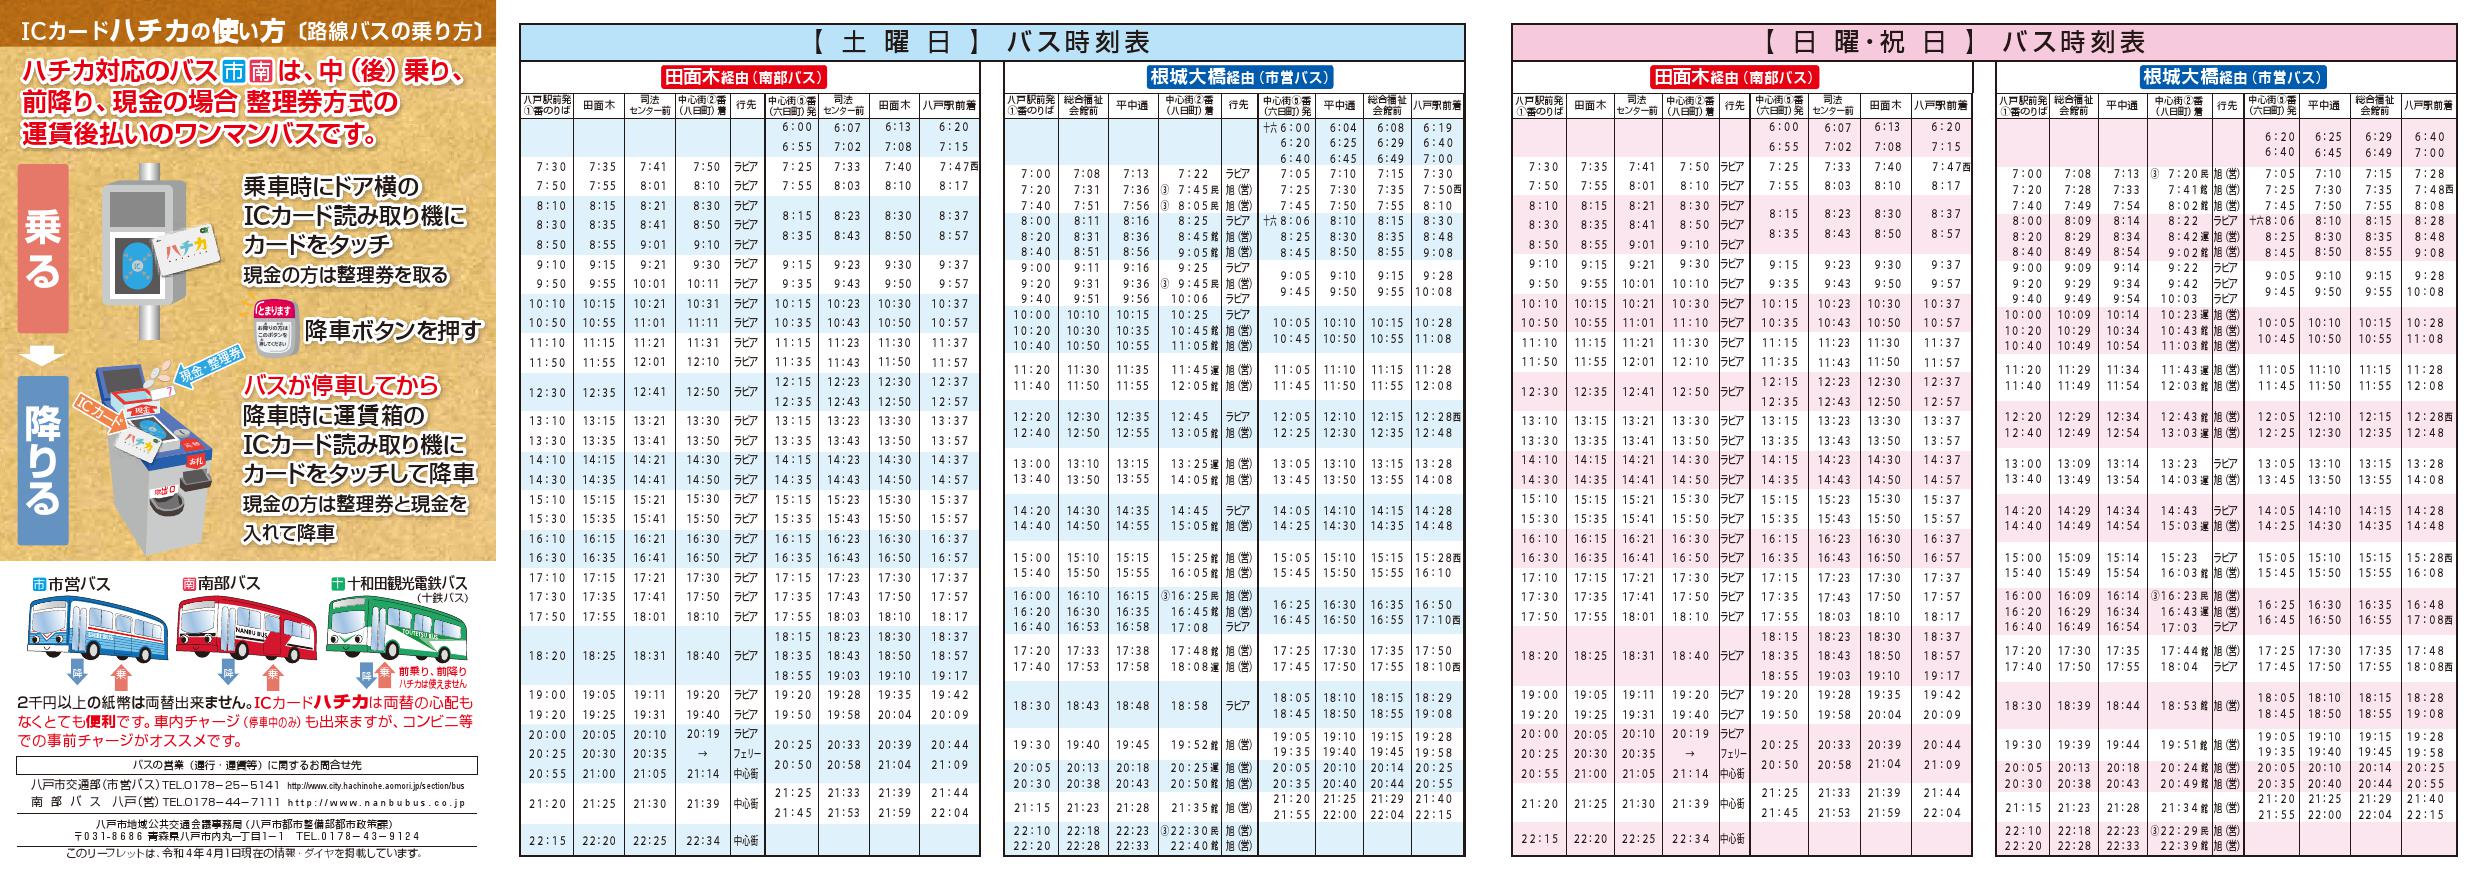 八戸駅線バス時刻表02